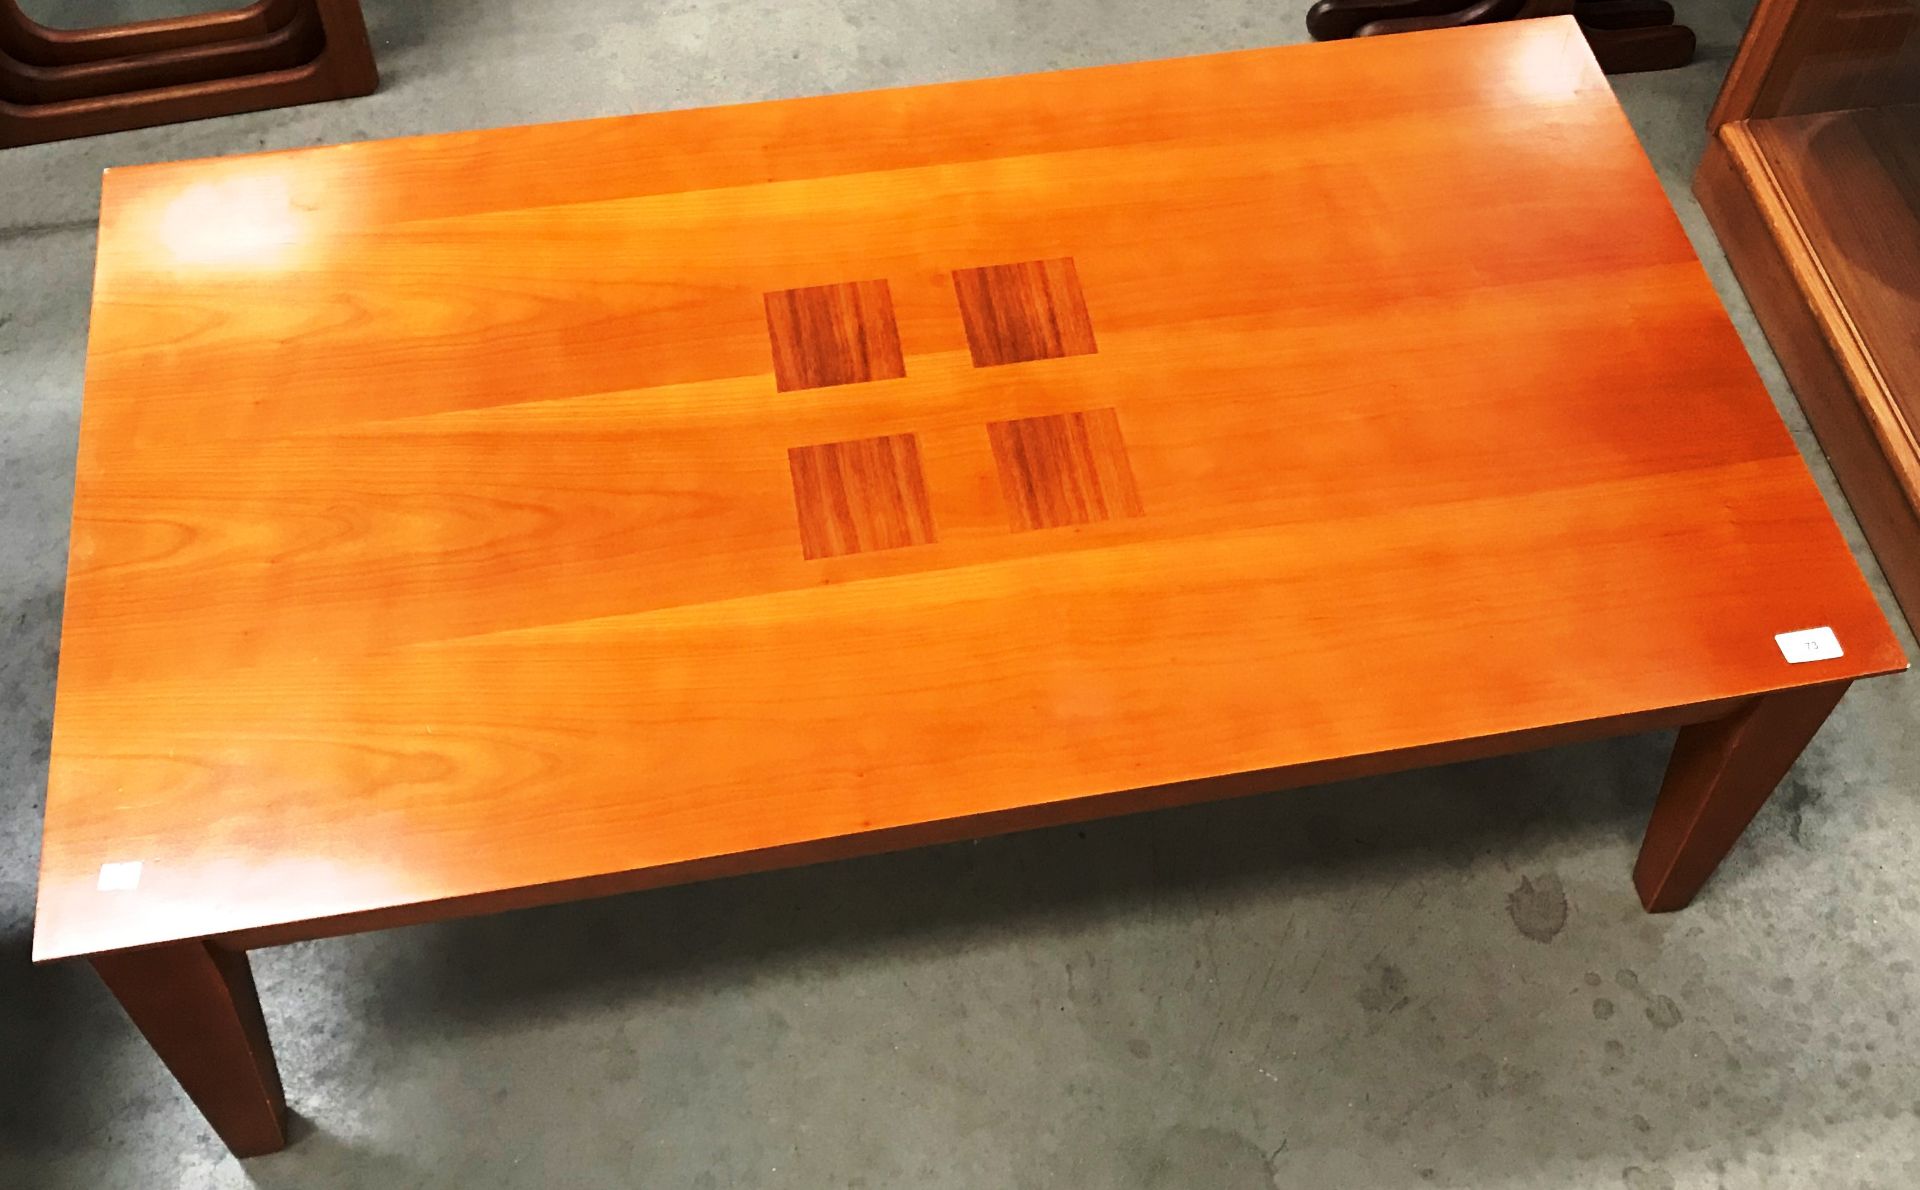 A 2003 medium wood finish coffee table 112 x 60cm - Image 2 of 2